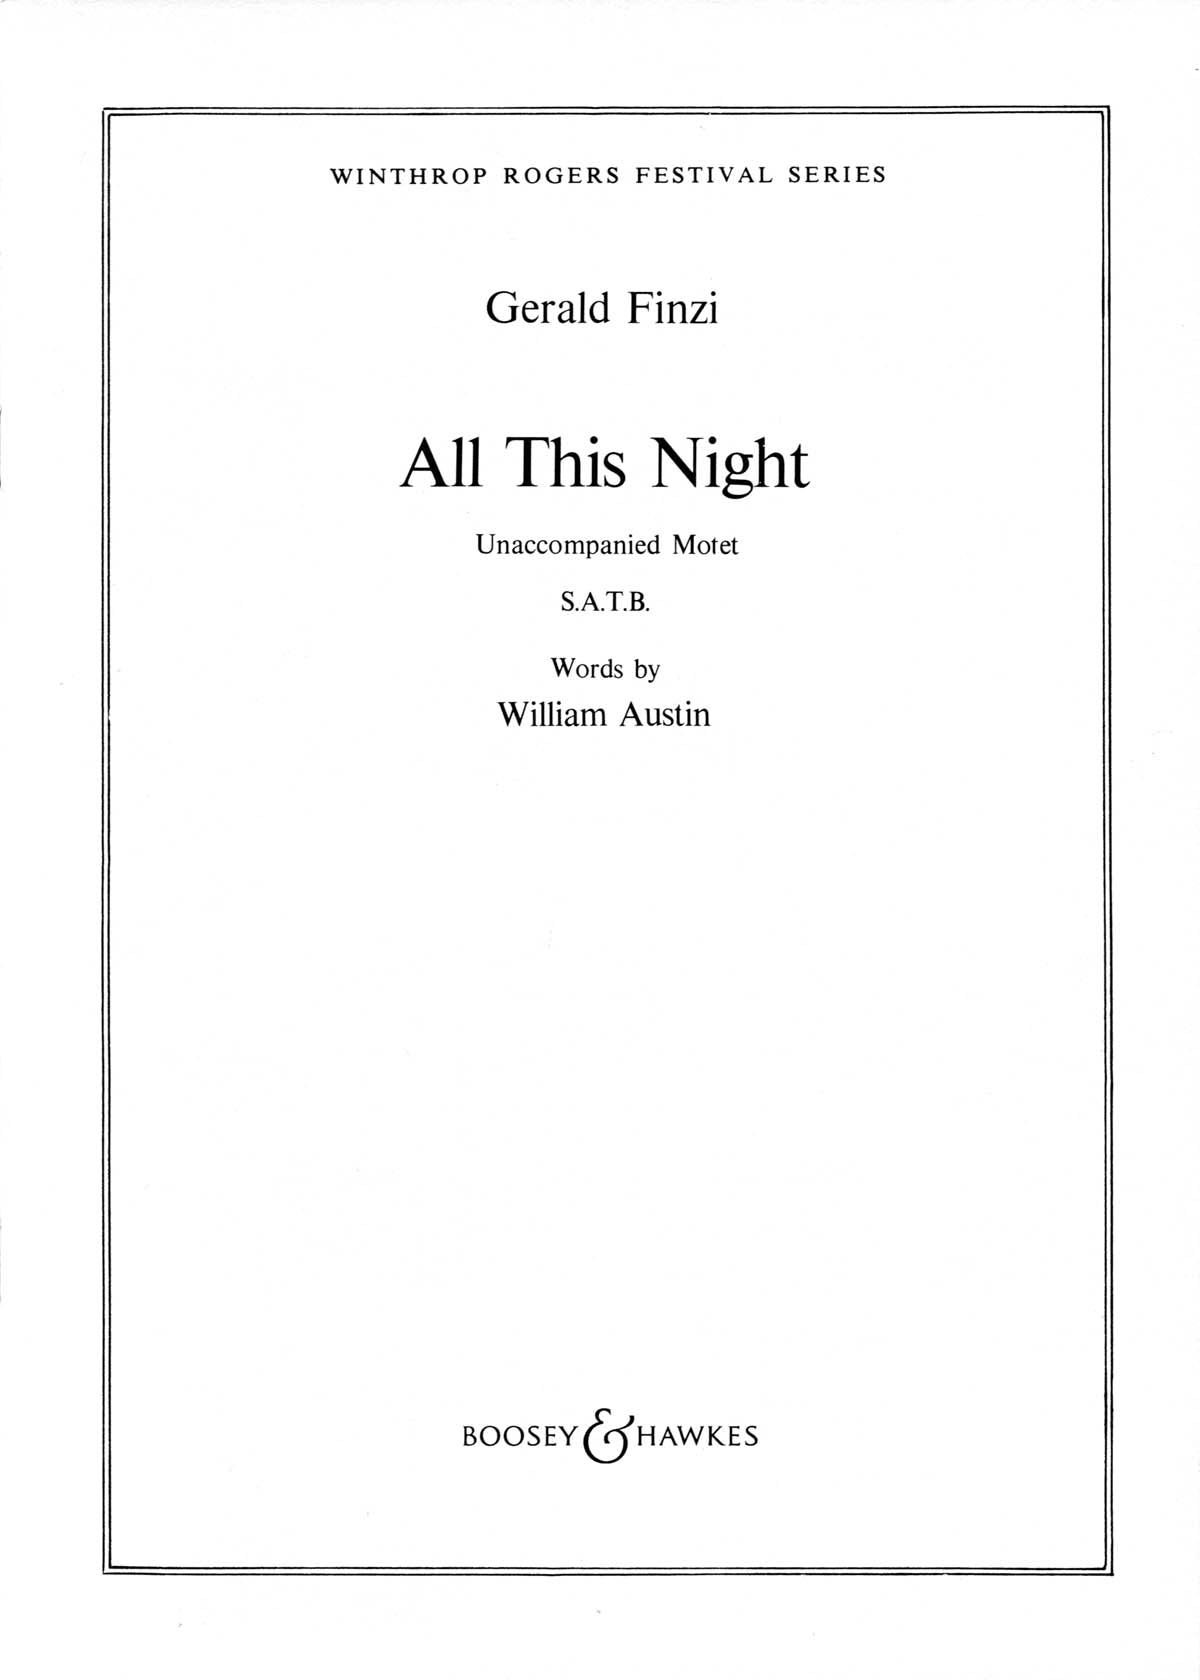 Finzi: All This Night